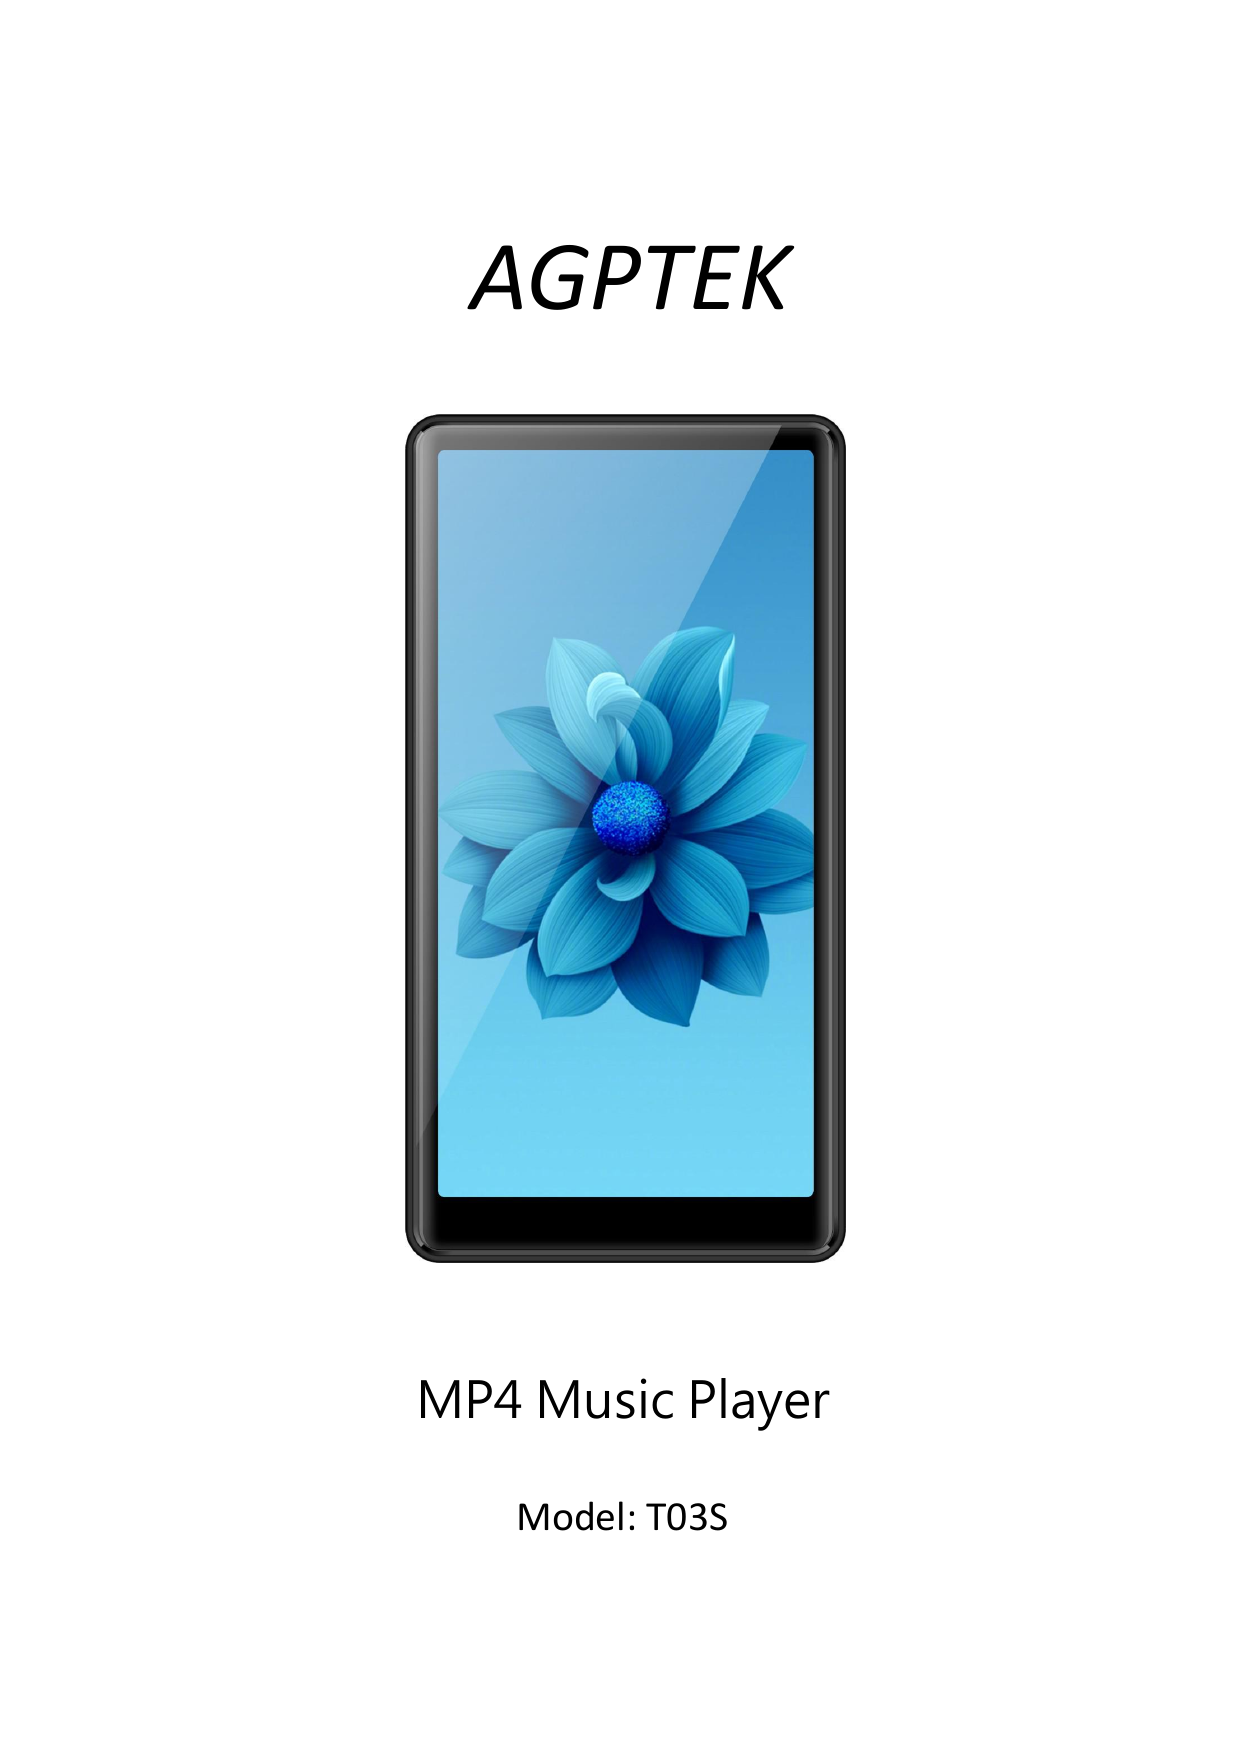 agptek music player a07 manual